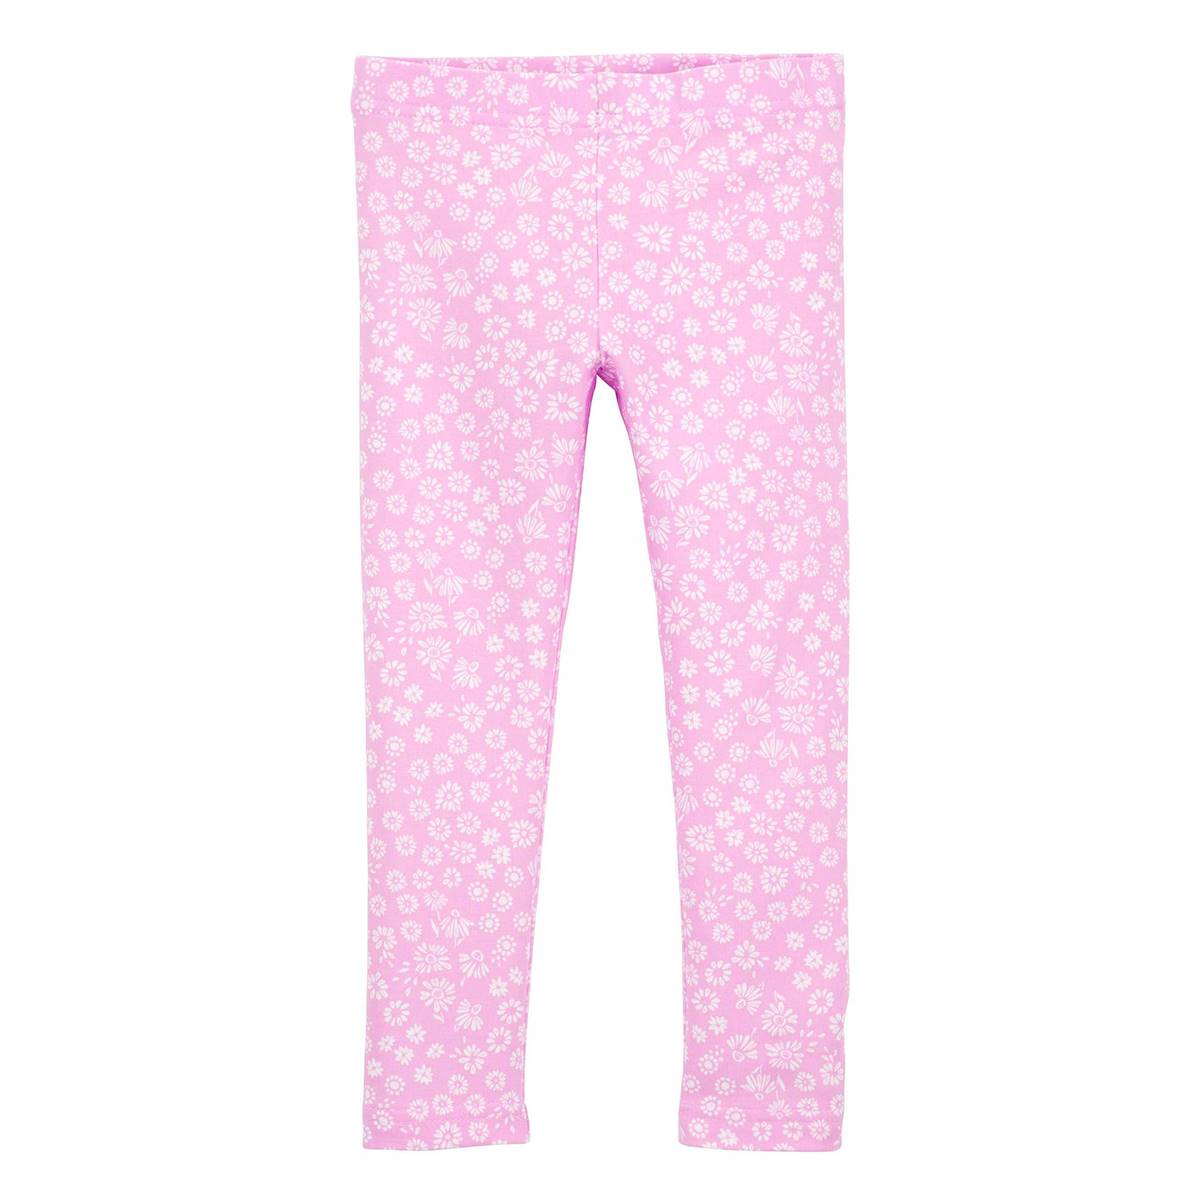 Girls Carter's(R) Pink Floral Leggings